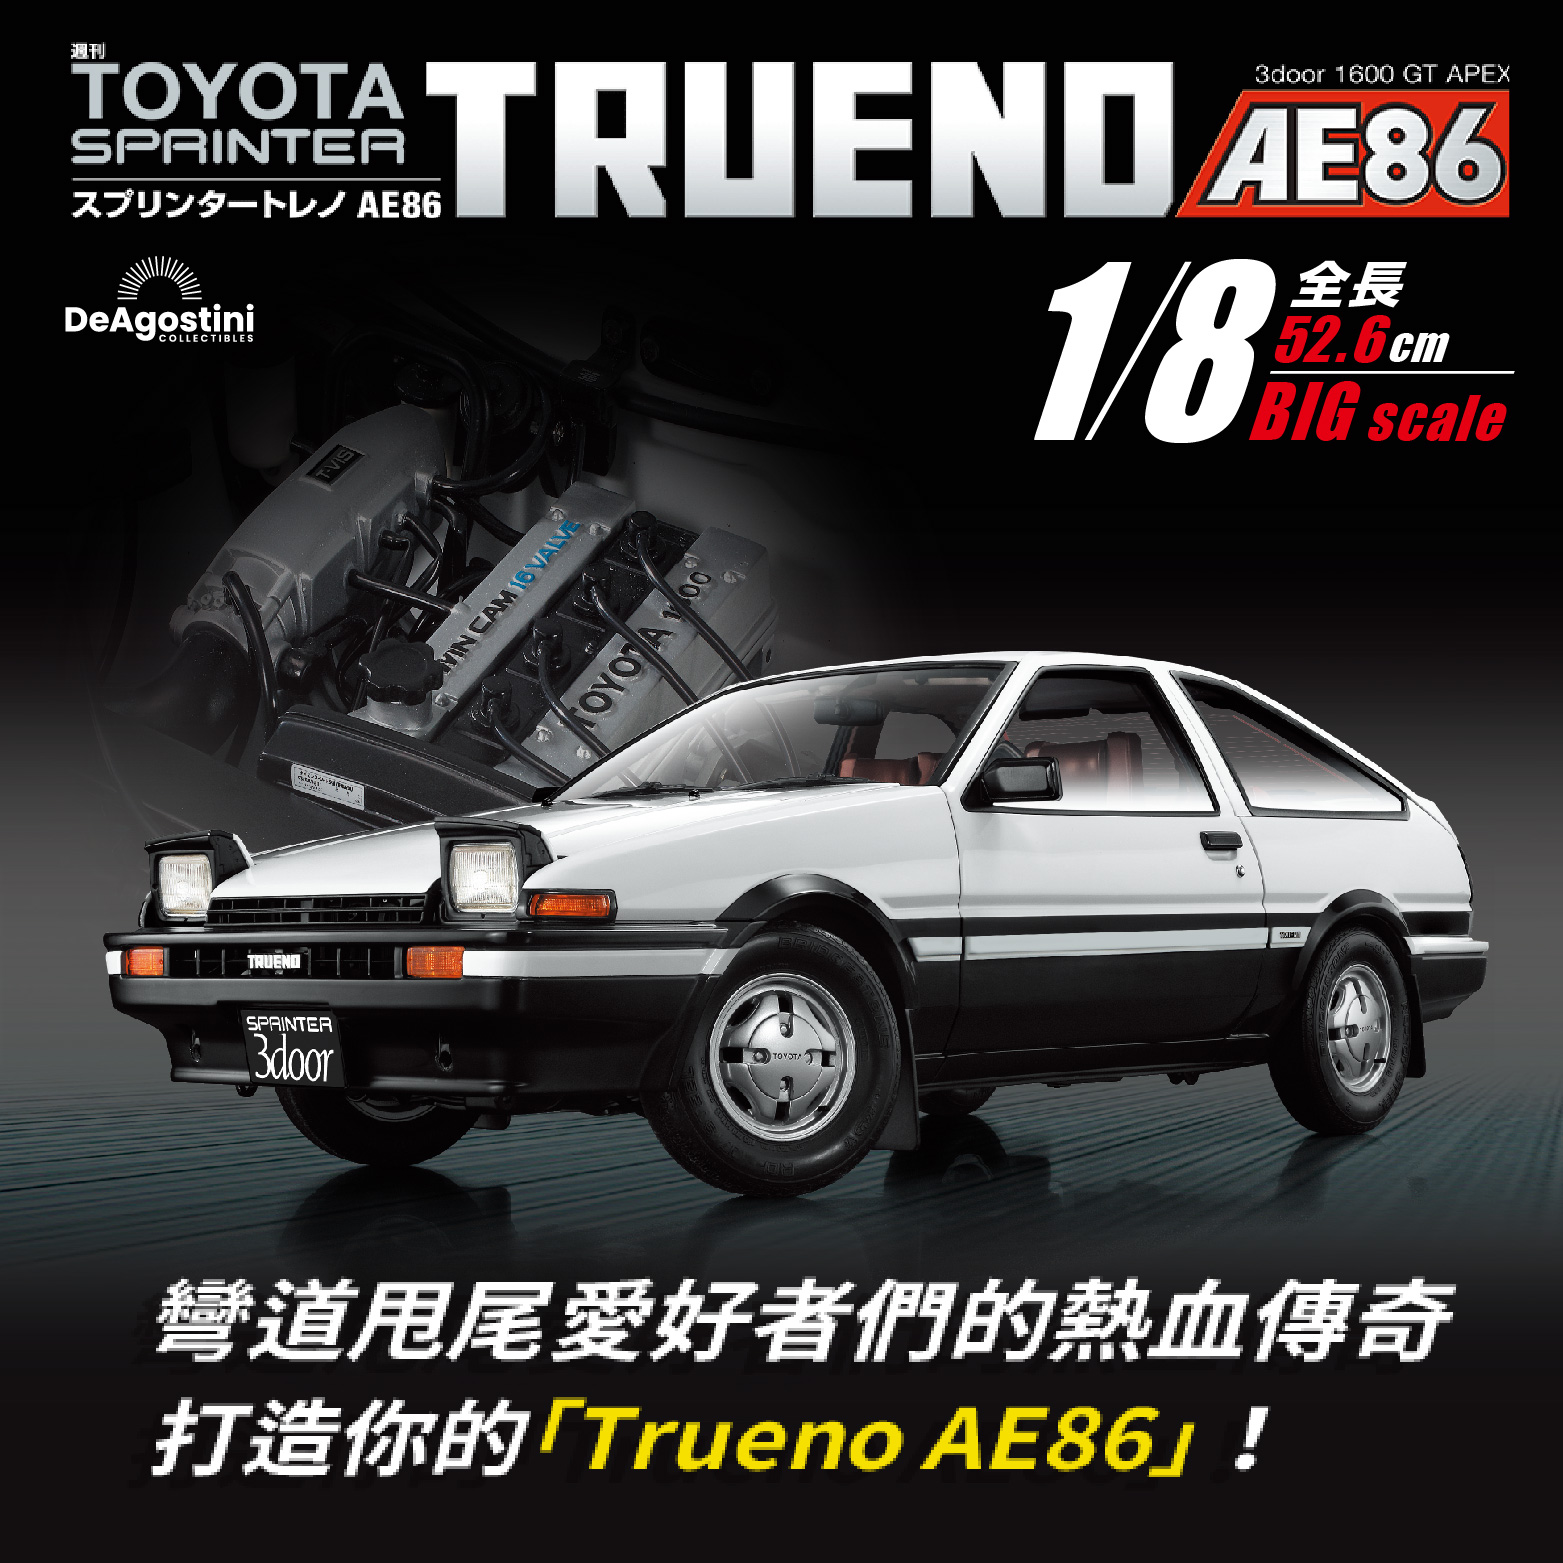 Toyota Sprinter Trueno AE86 組裝誌